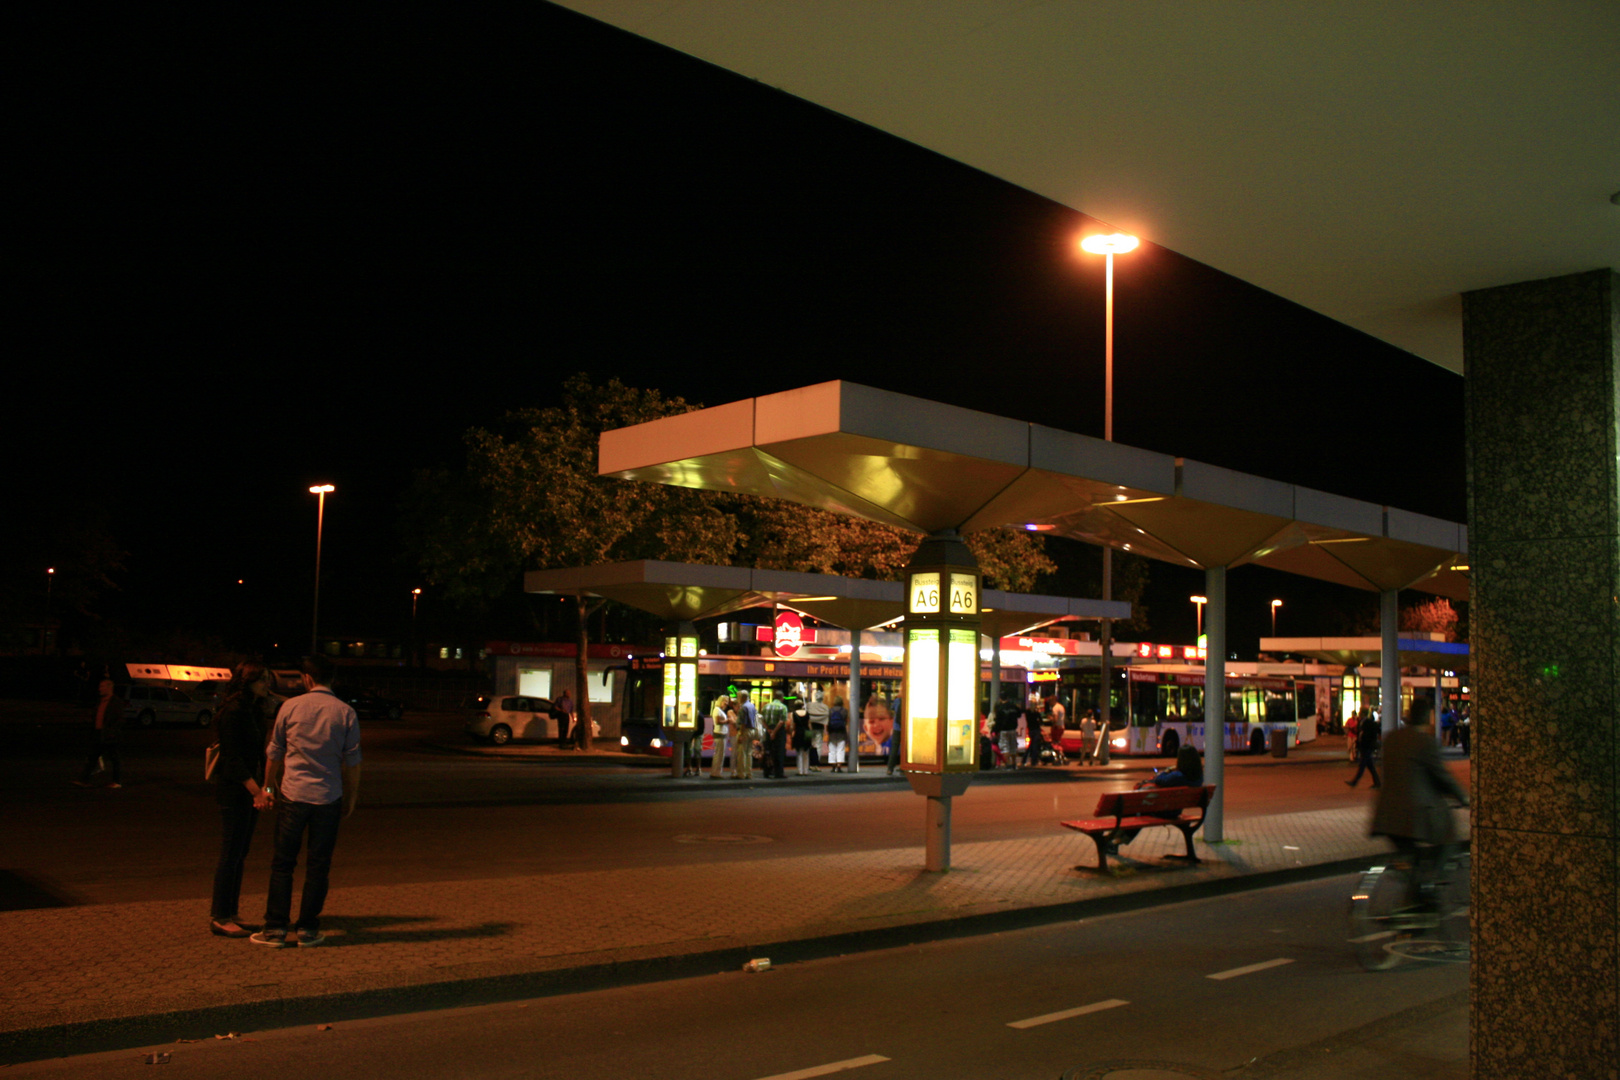 Bonn HBF Busbahnhof bei Nacht